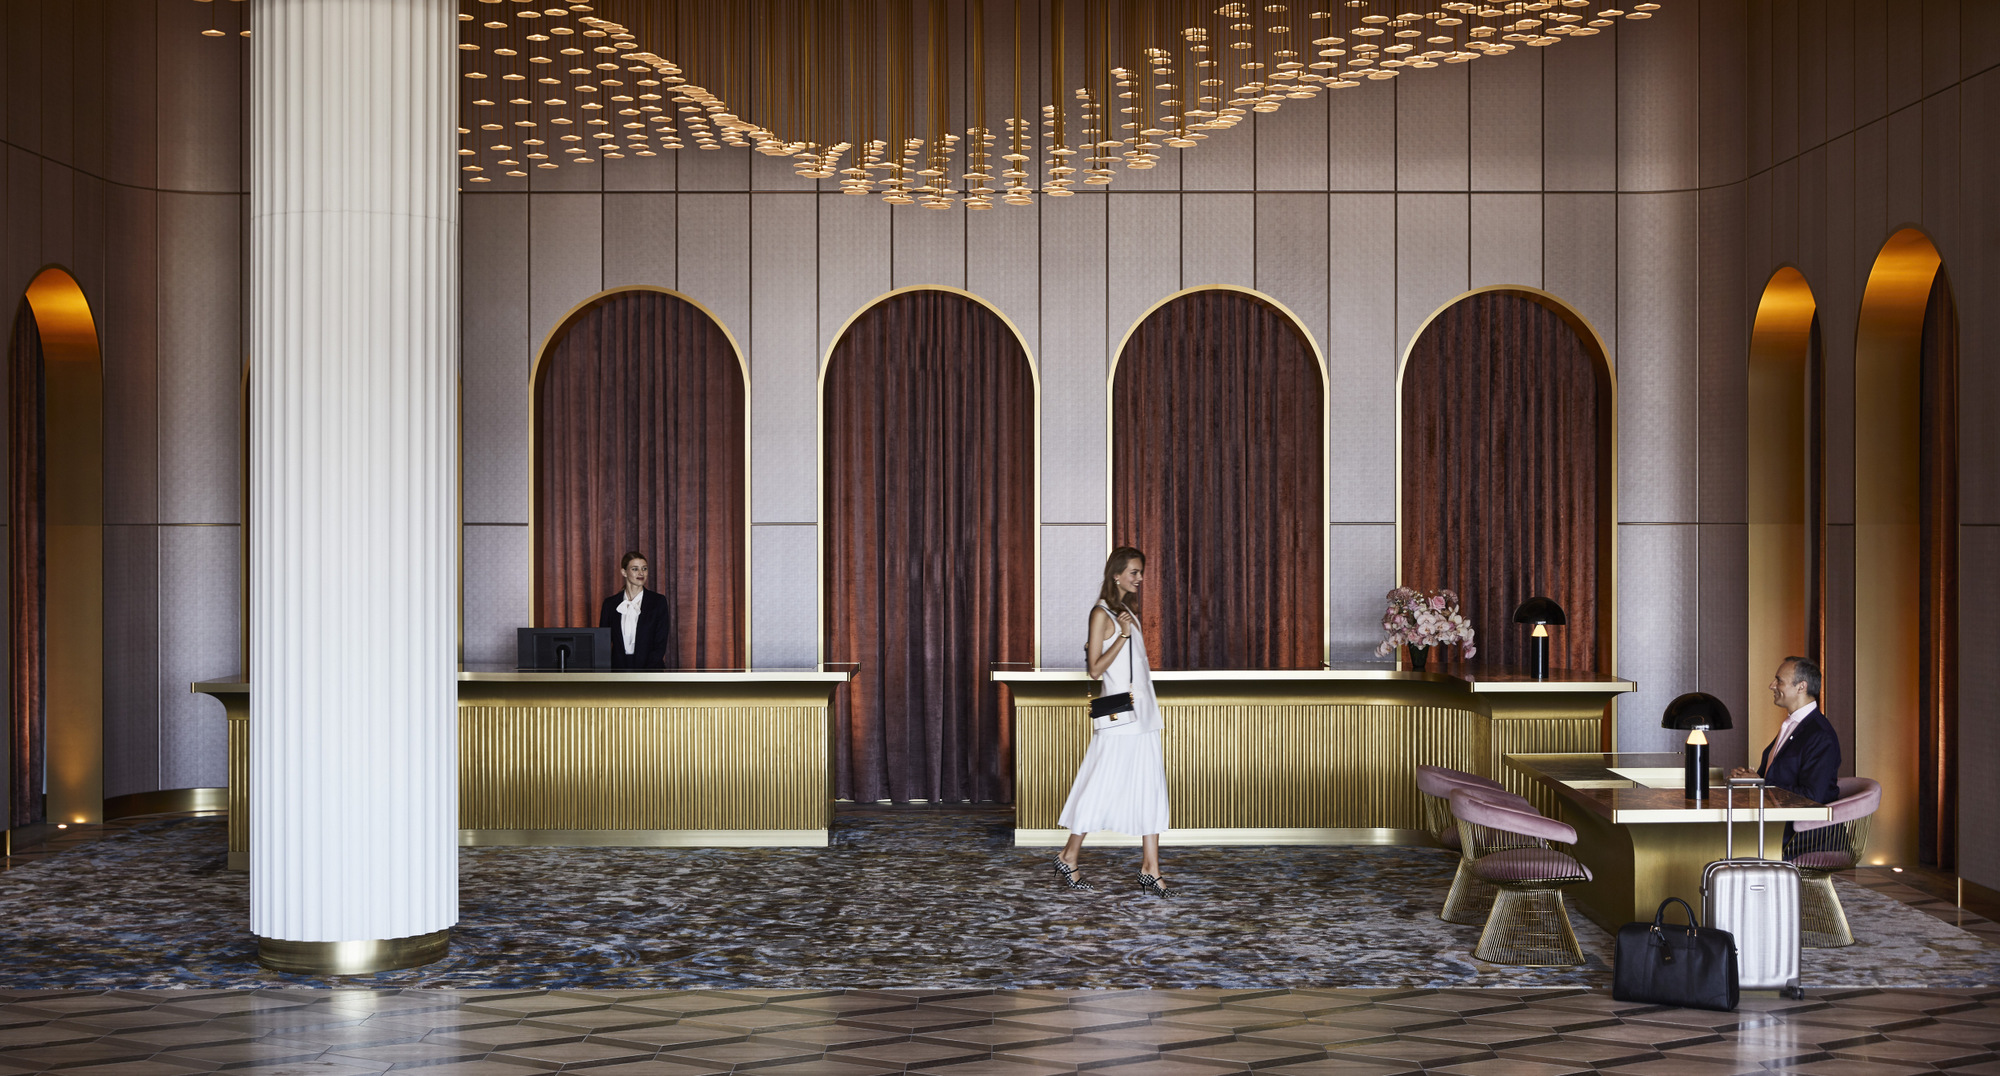 Chadstone Hotel Melbourne，MGallery by Sofitel|ART-Arrakis | 建筑室内设计的创新与灵感